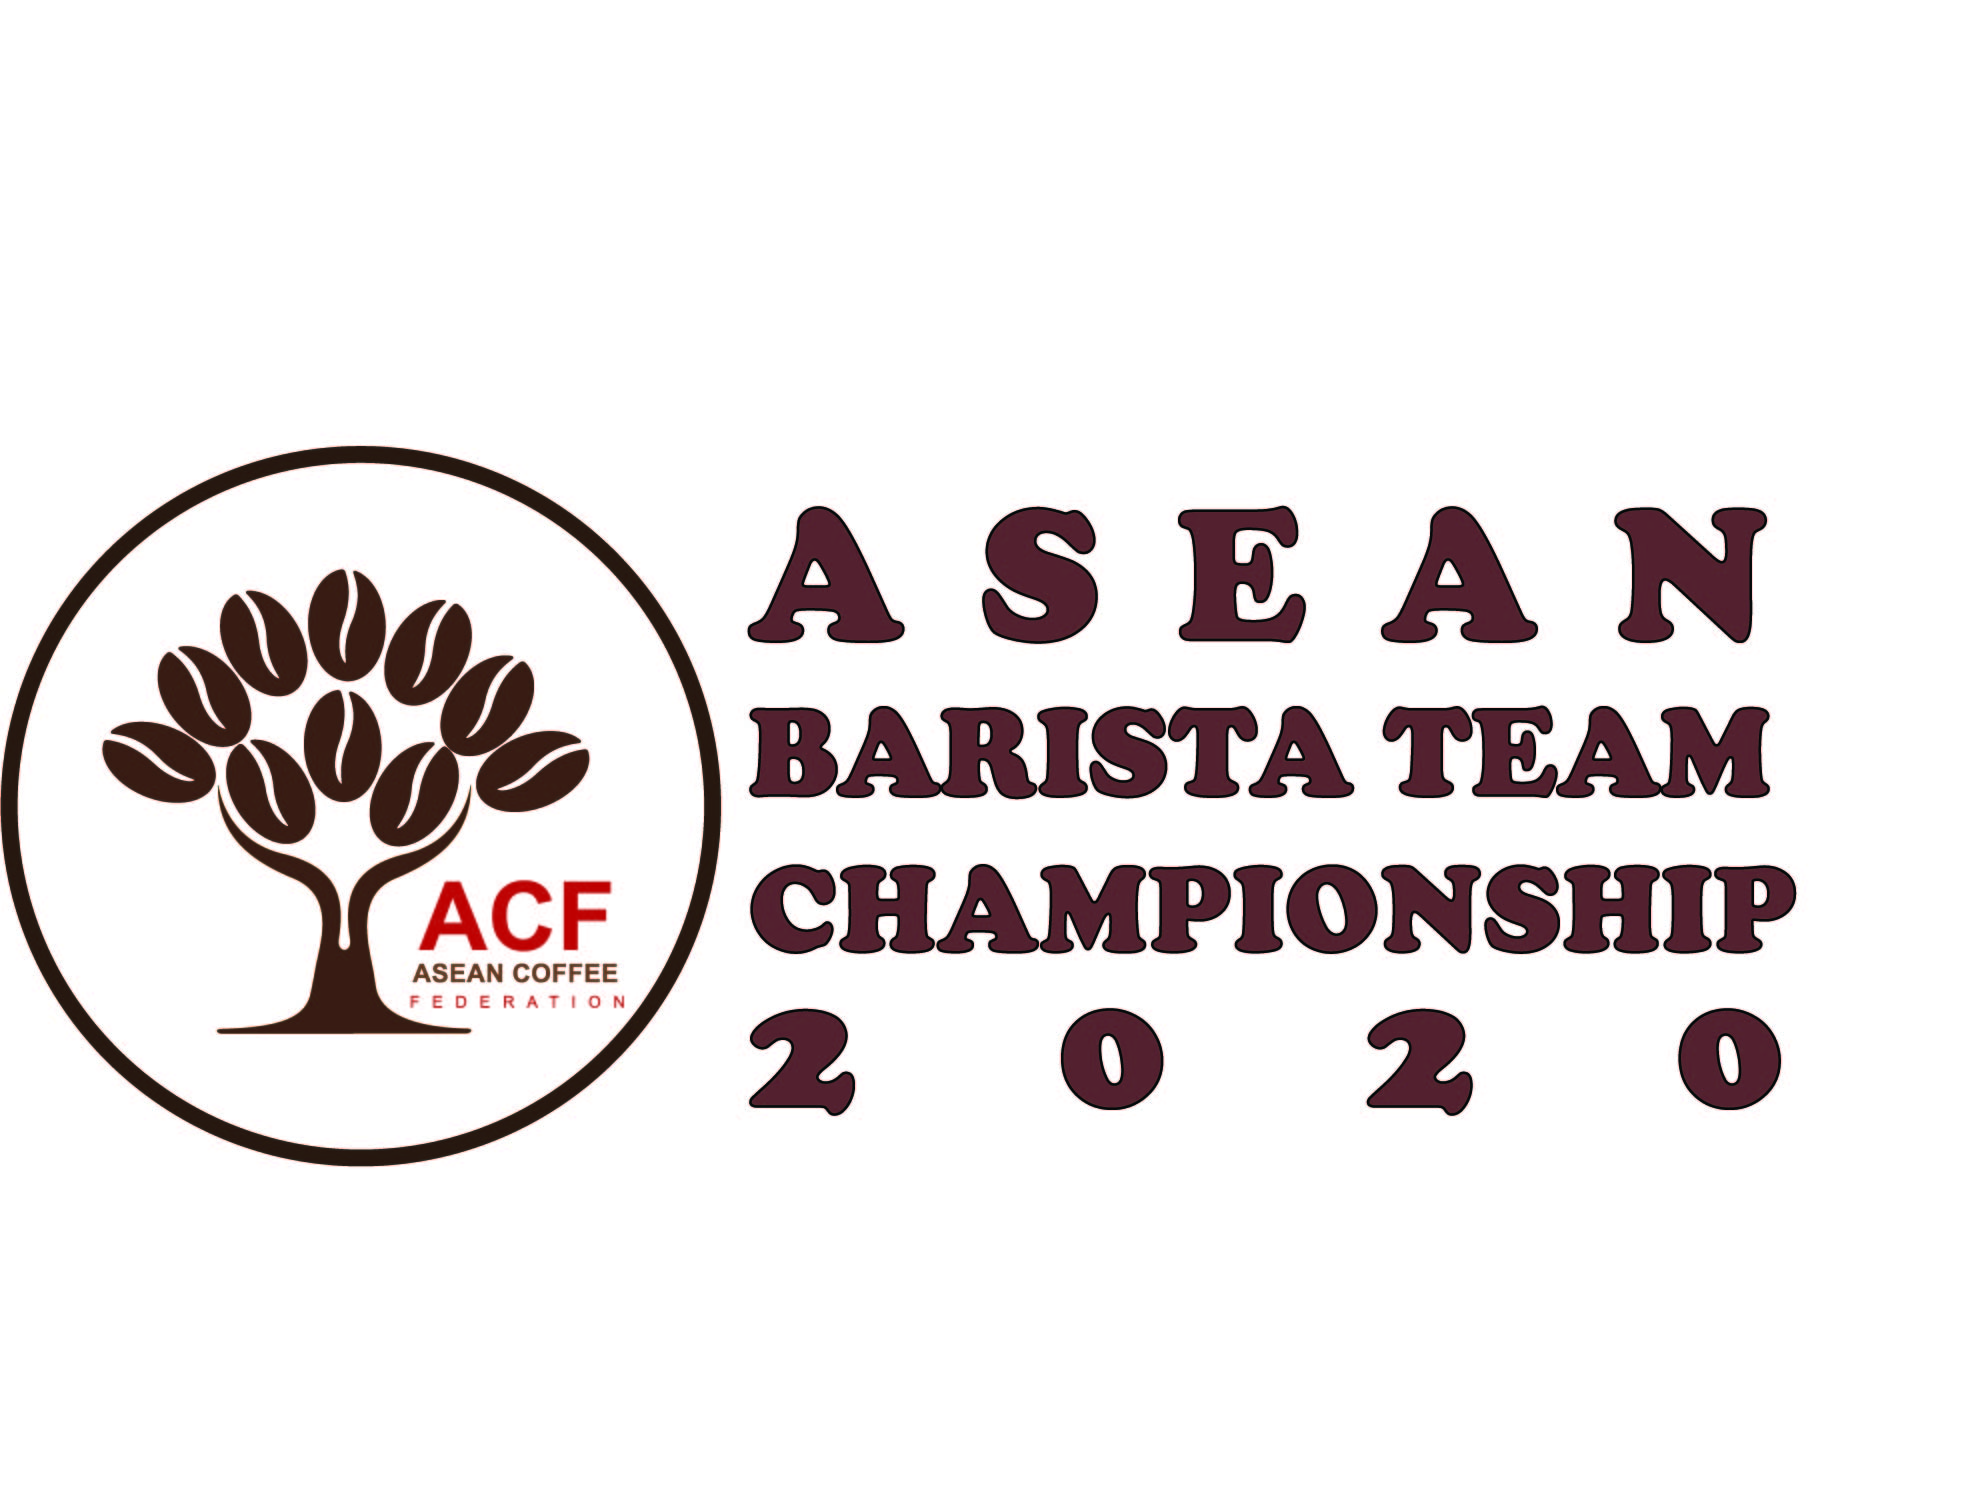 ASEAN Barista Team Championship 2020